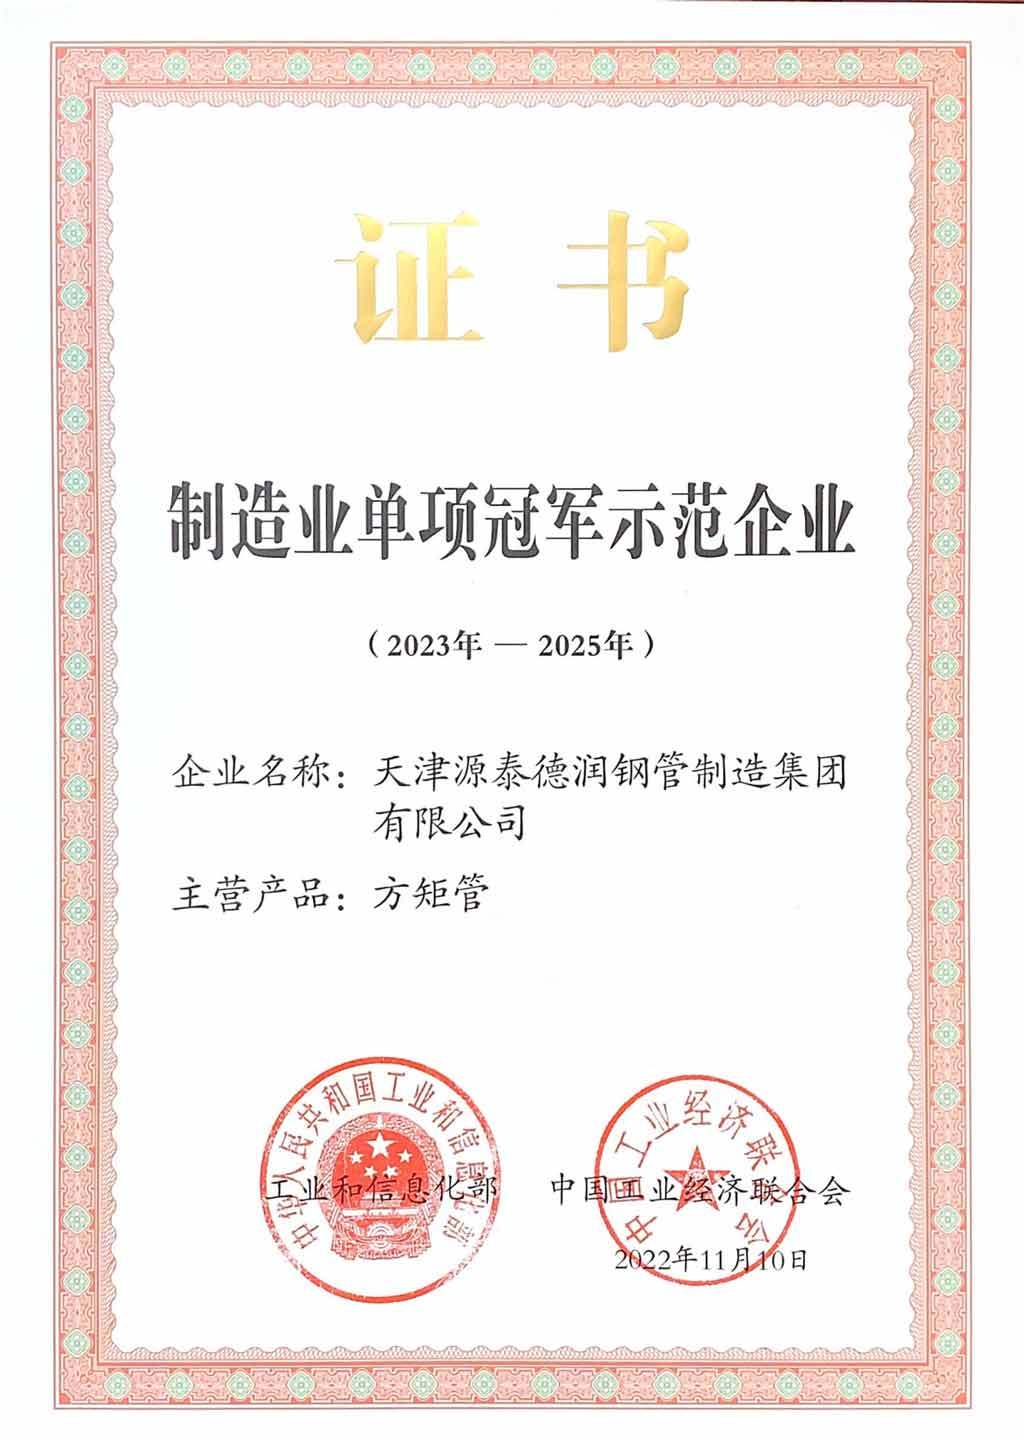 Yuantai Derun Steel Pipe Manufacturing Group - National Square Rectangular Steel Pipe Manufacturing Single Champion Certificate